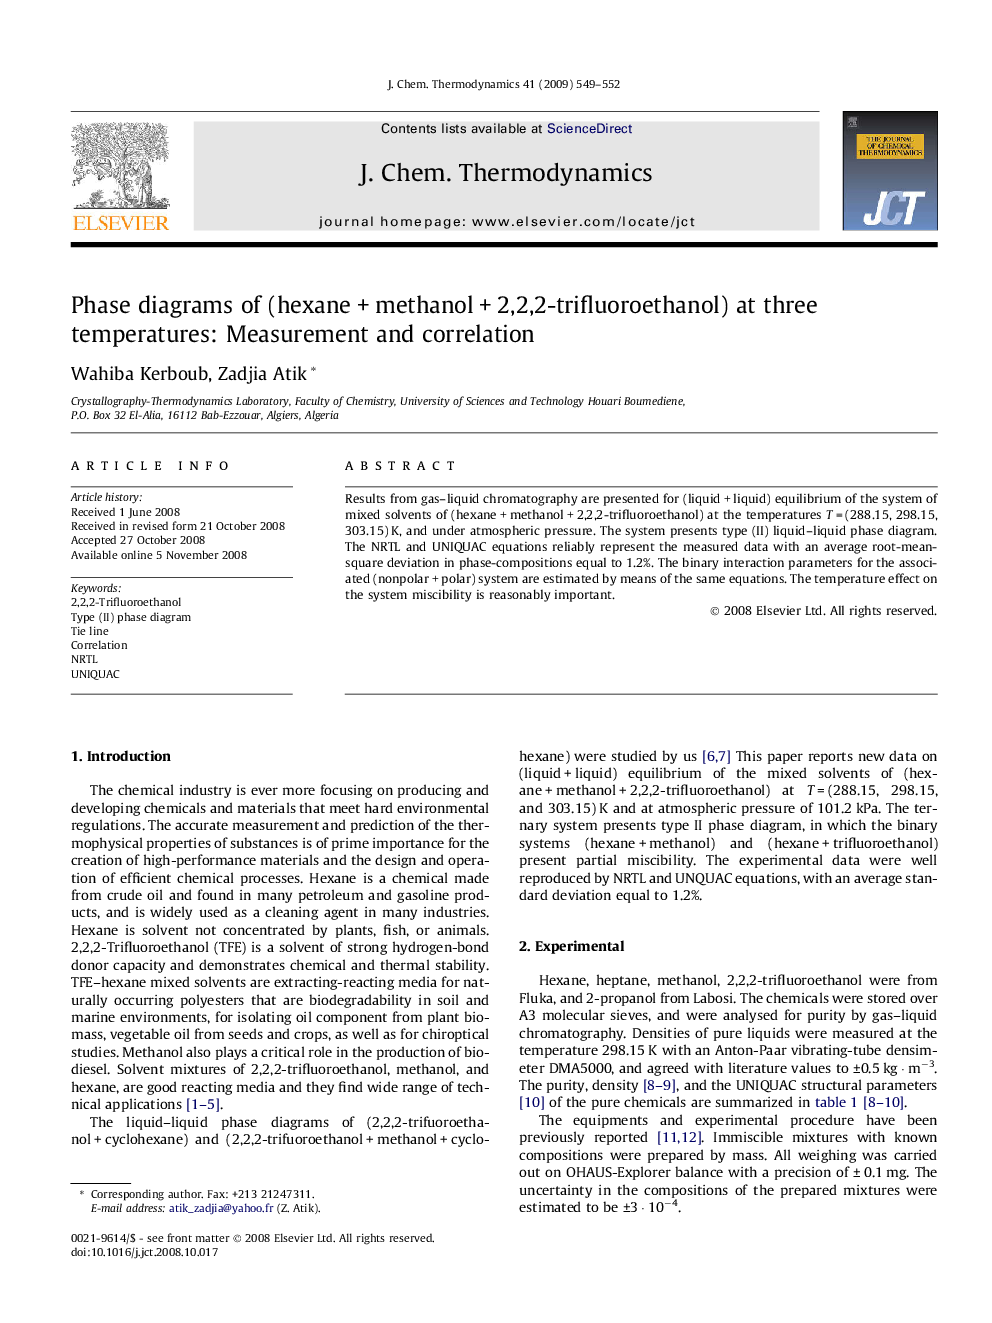 Phase diagrams of (hexane + methanol + 2,2,2-trifluoroethanol) at three temperatures: Measurement and correlation